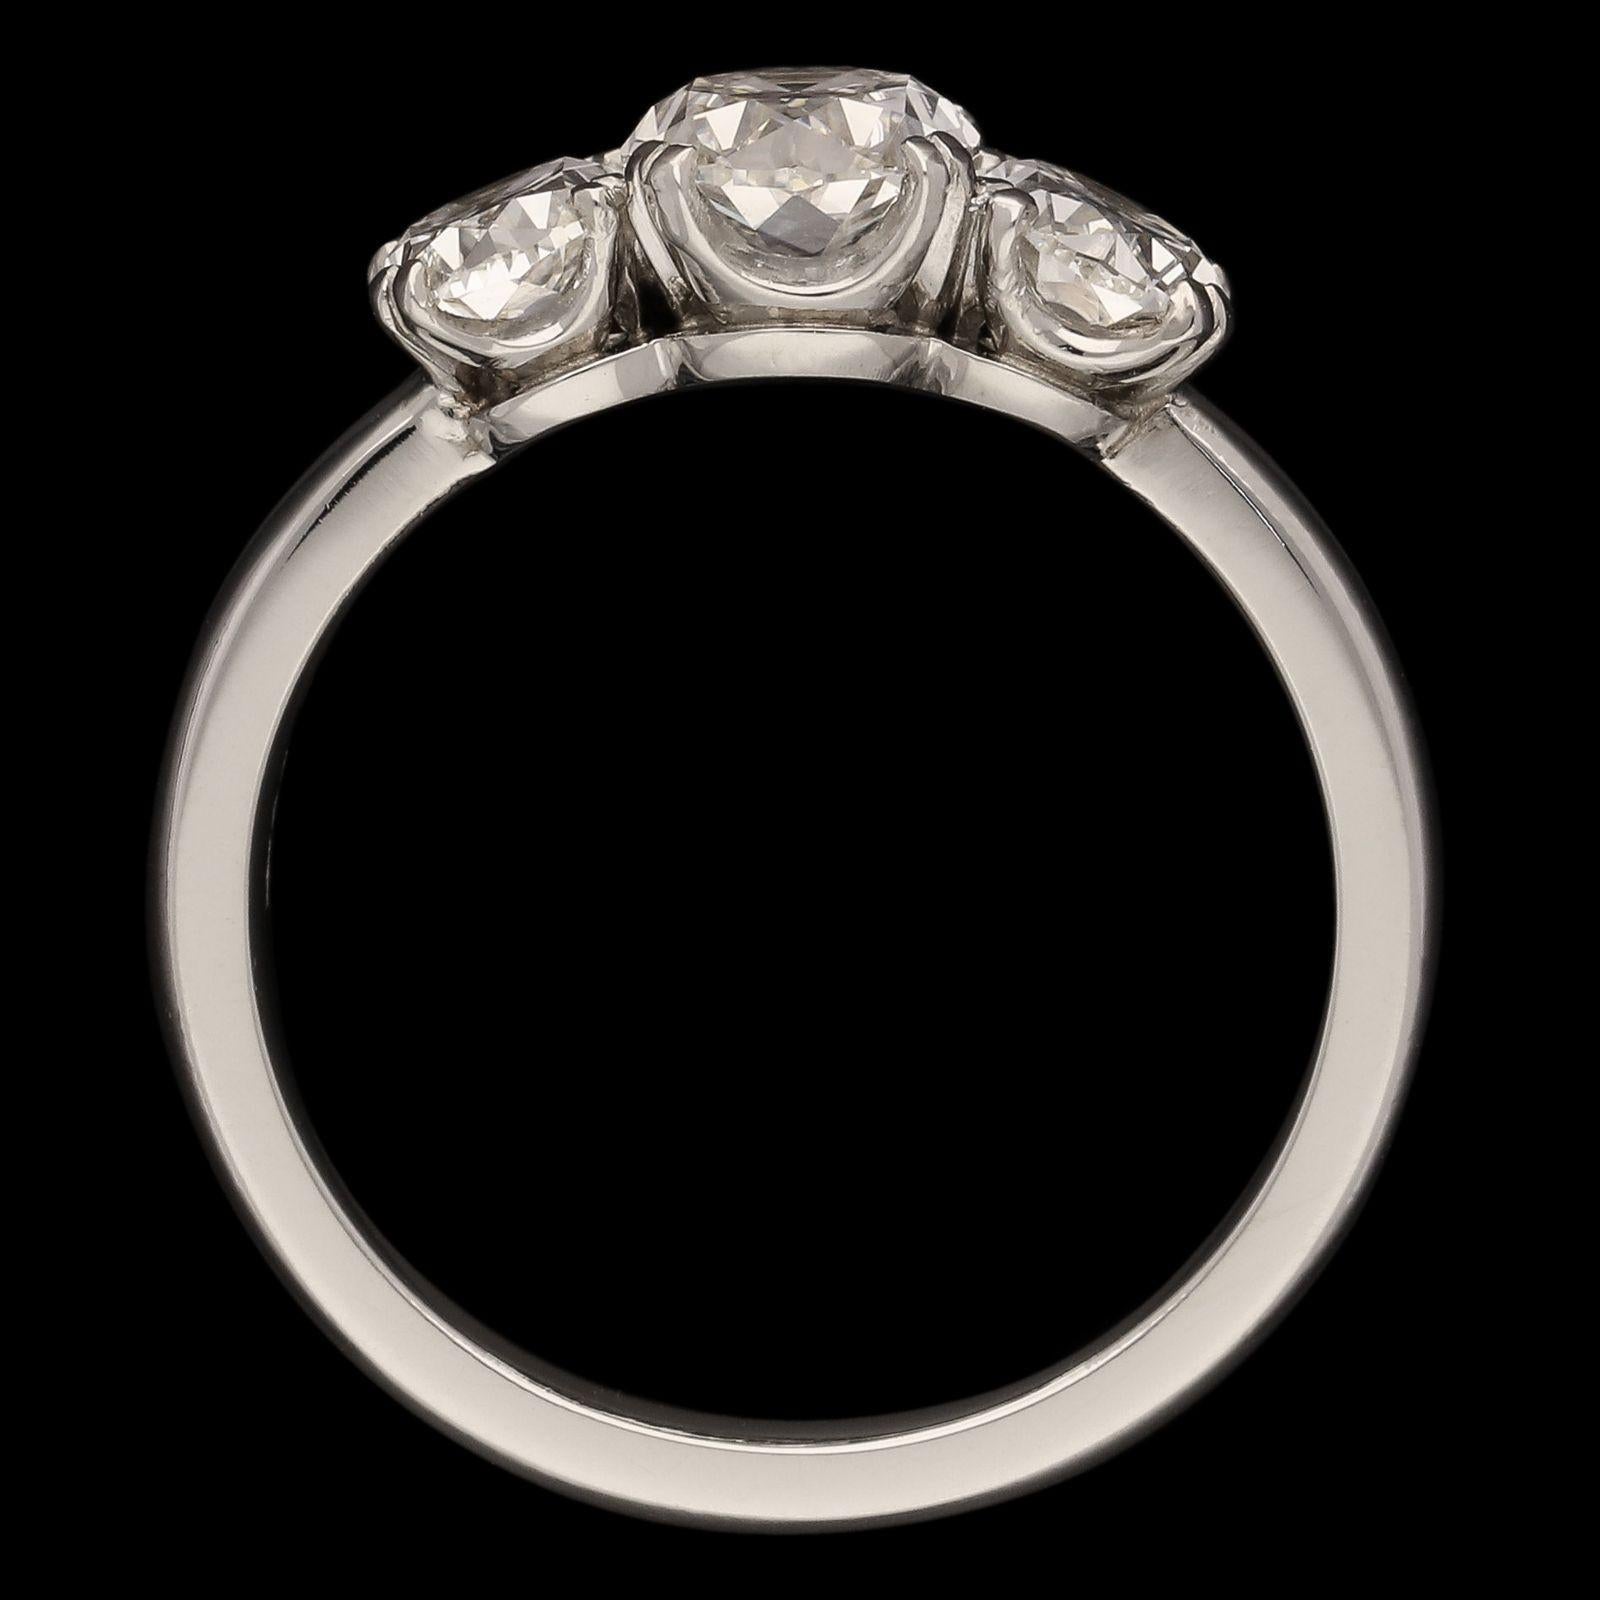 Hancocks 2ct Three Stone Oval Brilliant Cut Diamond Ring in Platinum In New Condition For Sale In London, GB